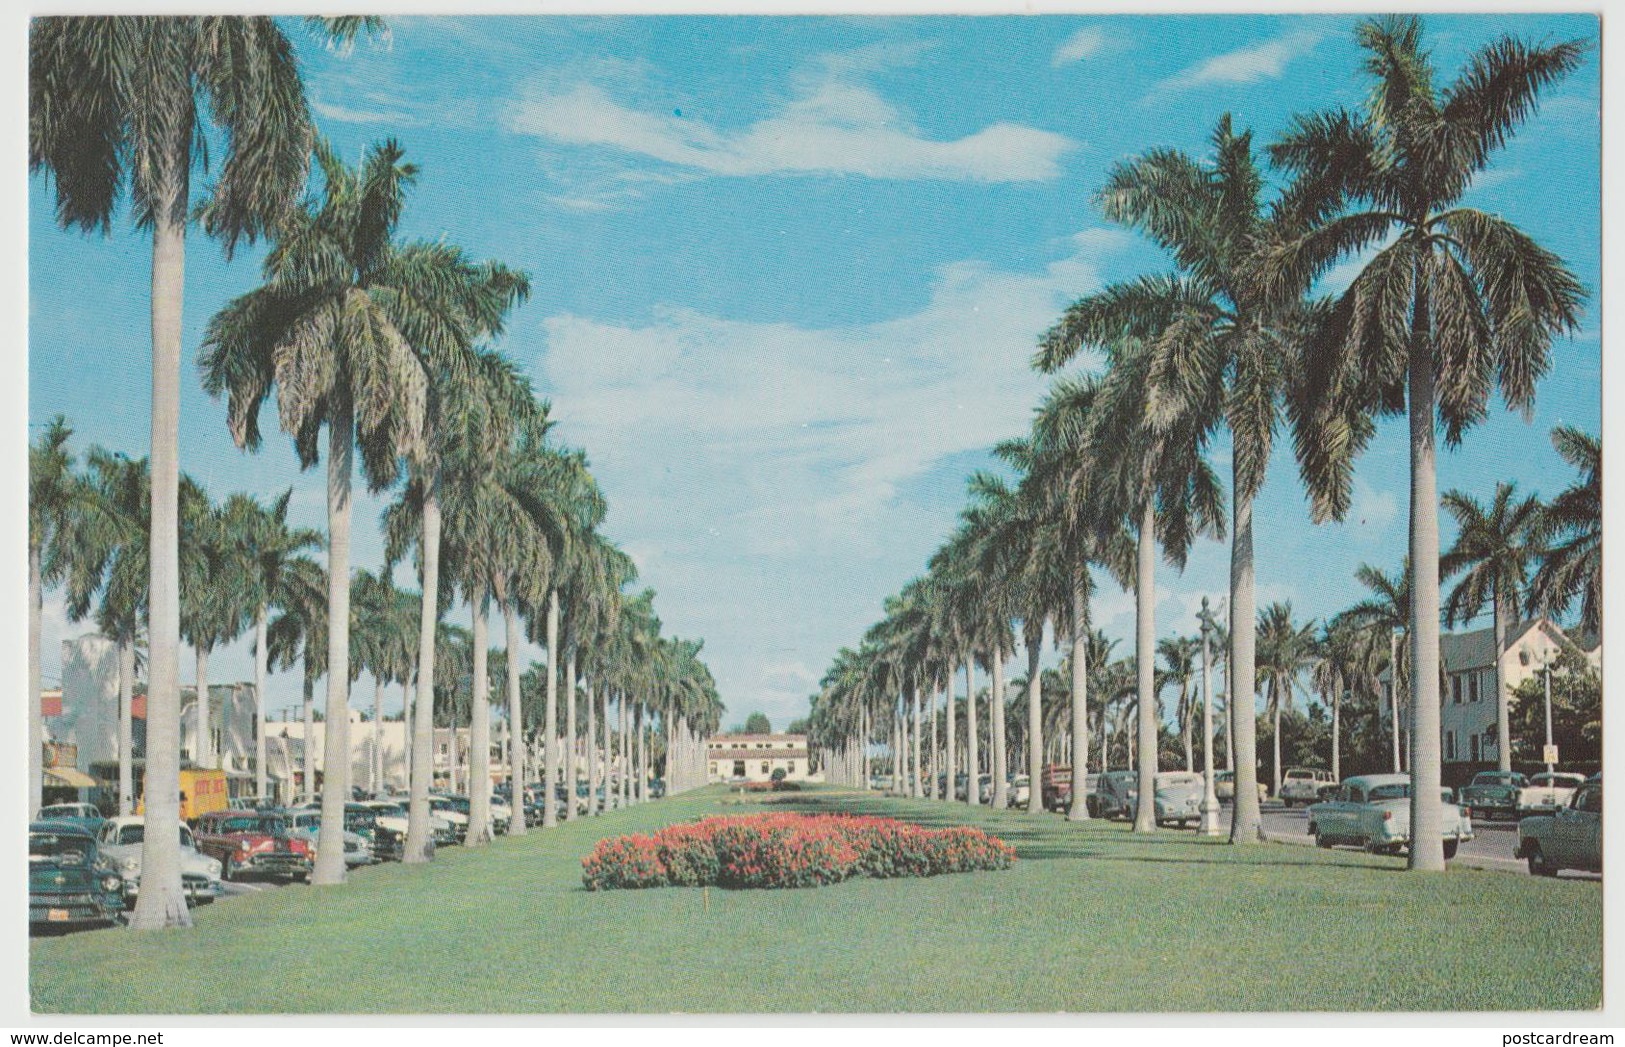 Palm Beach FL Royal Palm Trees Agricultural Postcard Horticulture - West Palm Beach